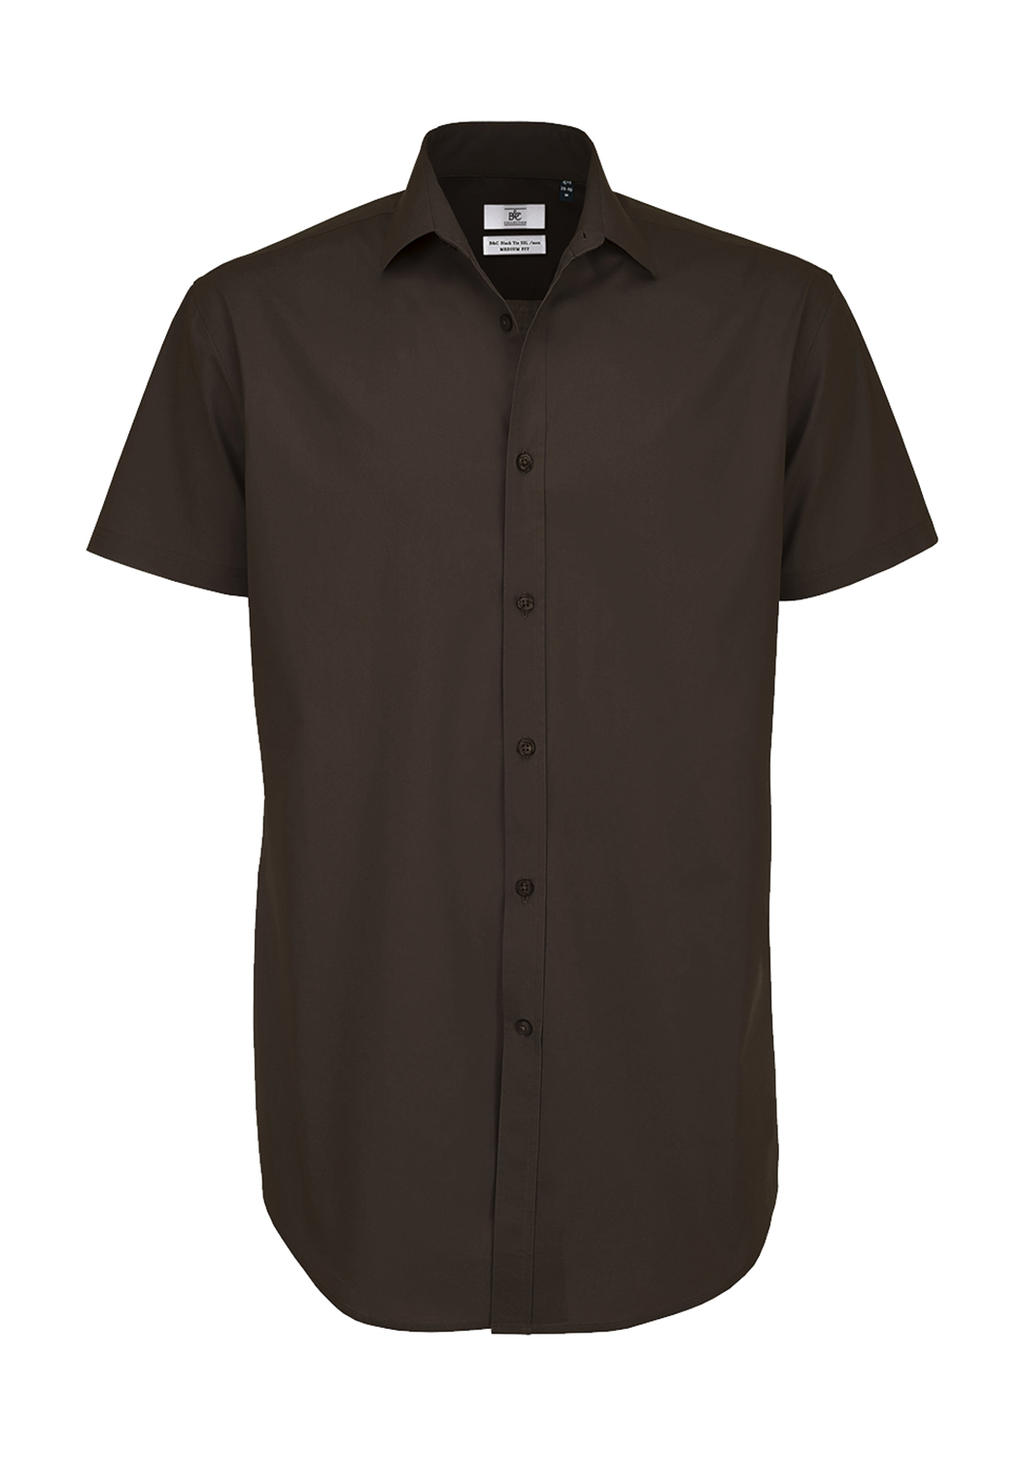  Black Tie SSL/men Poplin Shirt in Farbe Coffee Bean